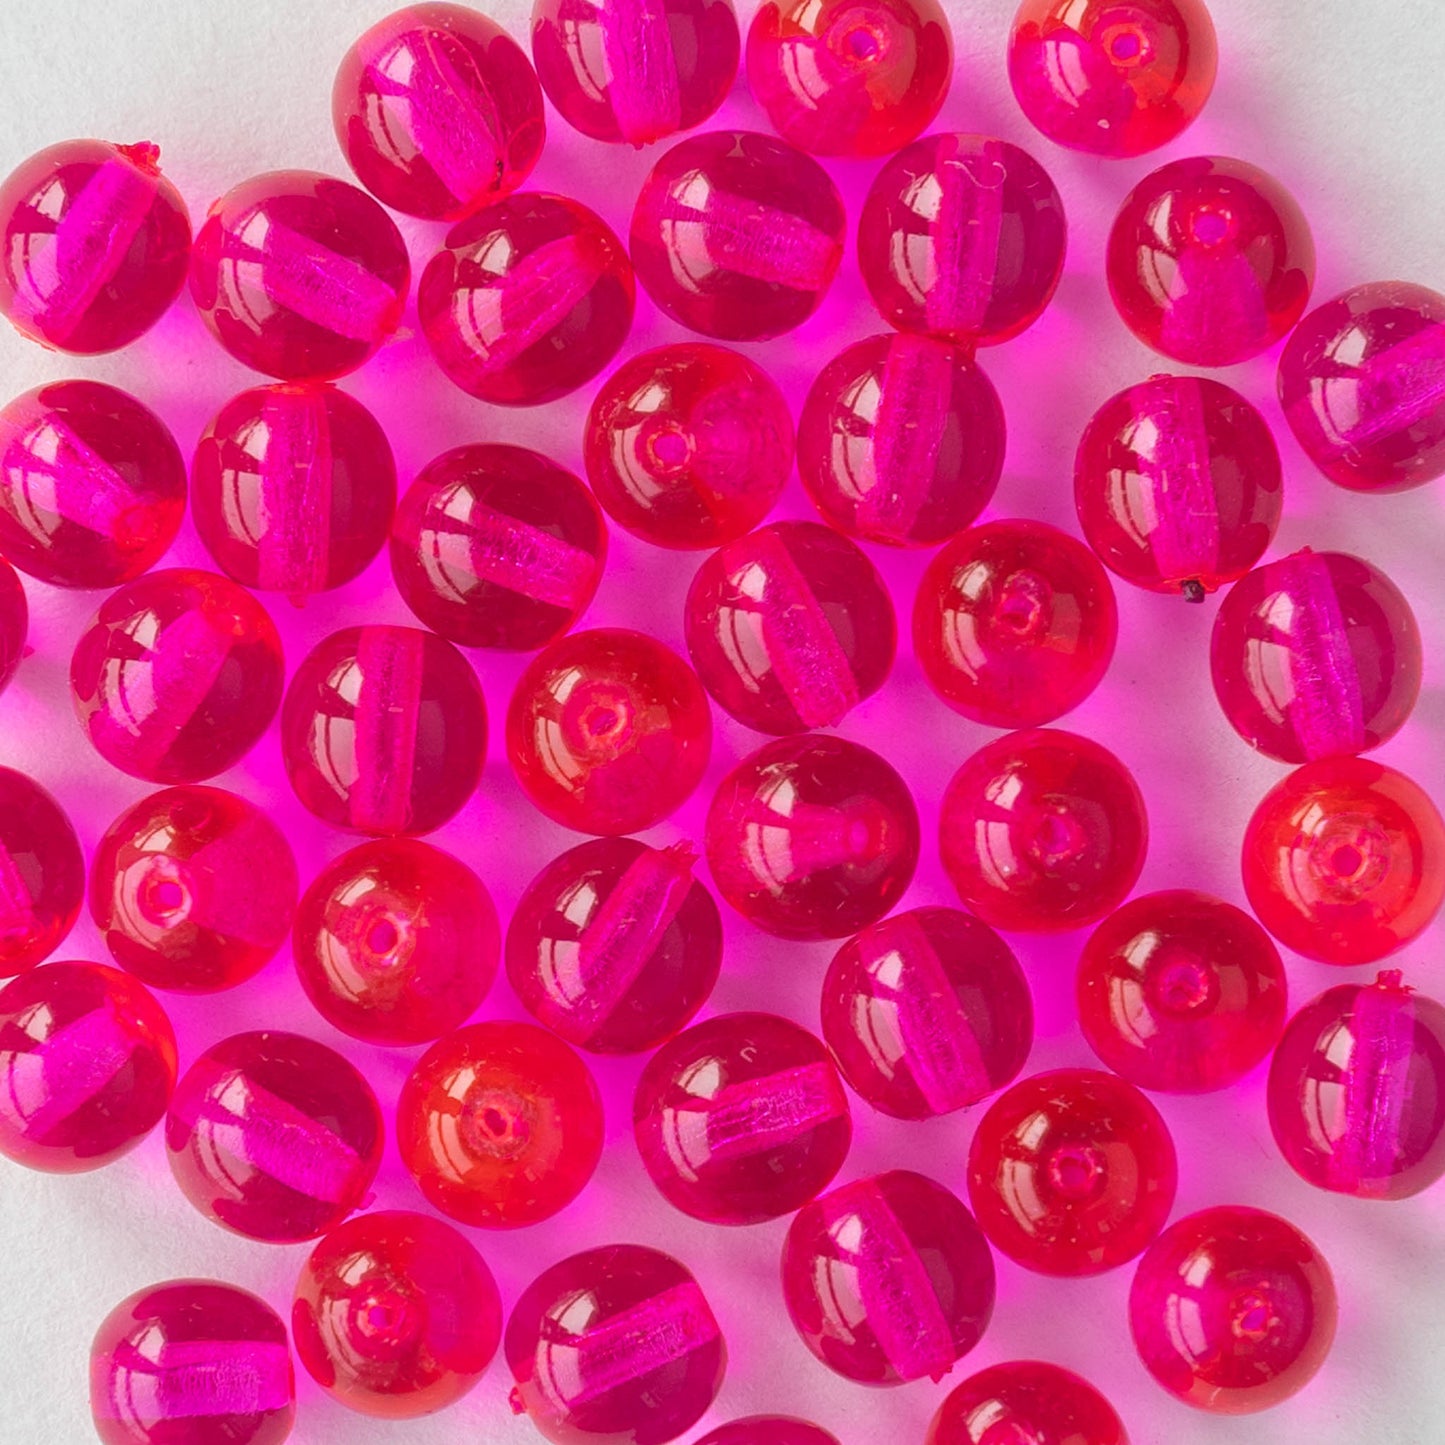 6mm Round Glass Beads - Hot Pink - 50 beads